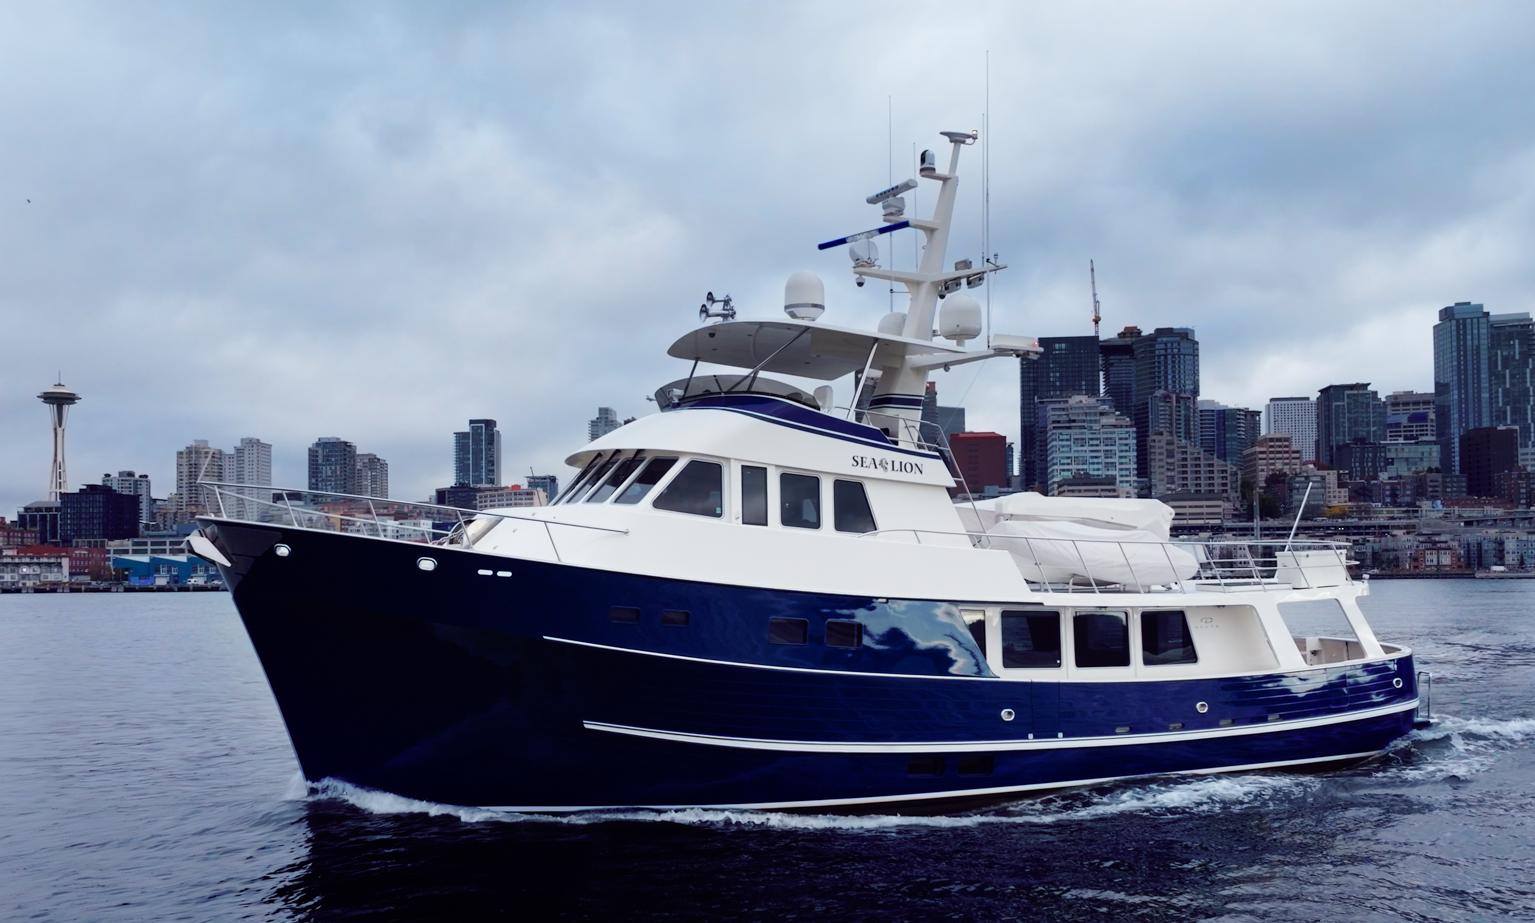 Sea Lion Yacht Photos Pics Stbd profile